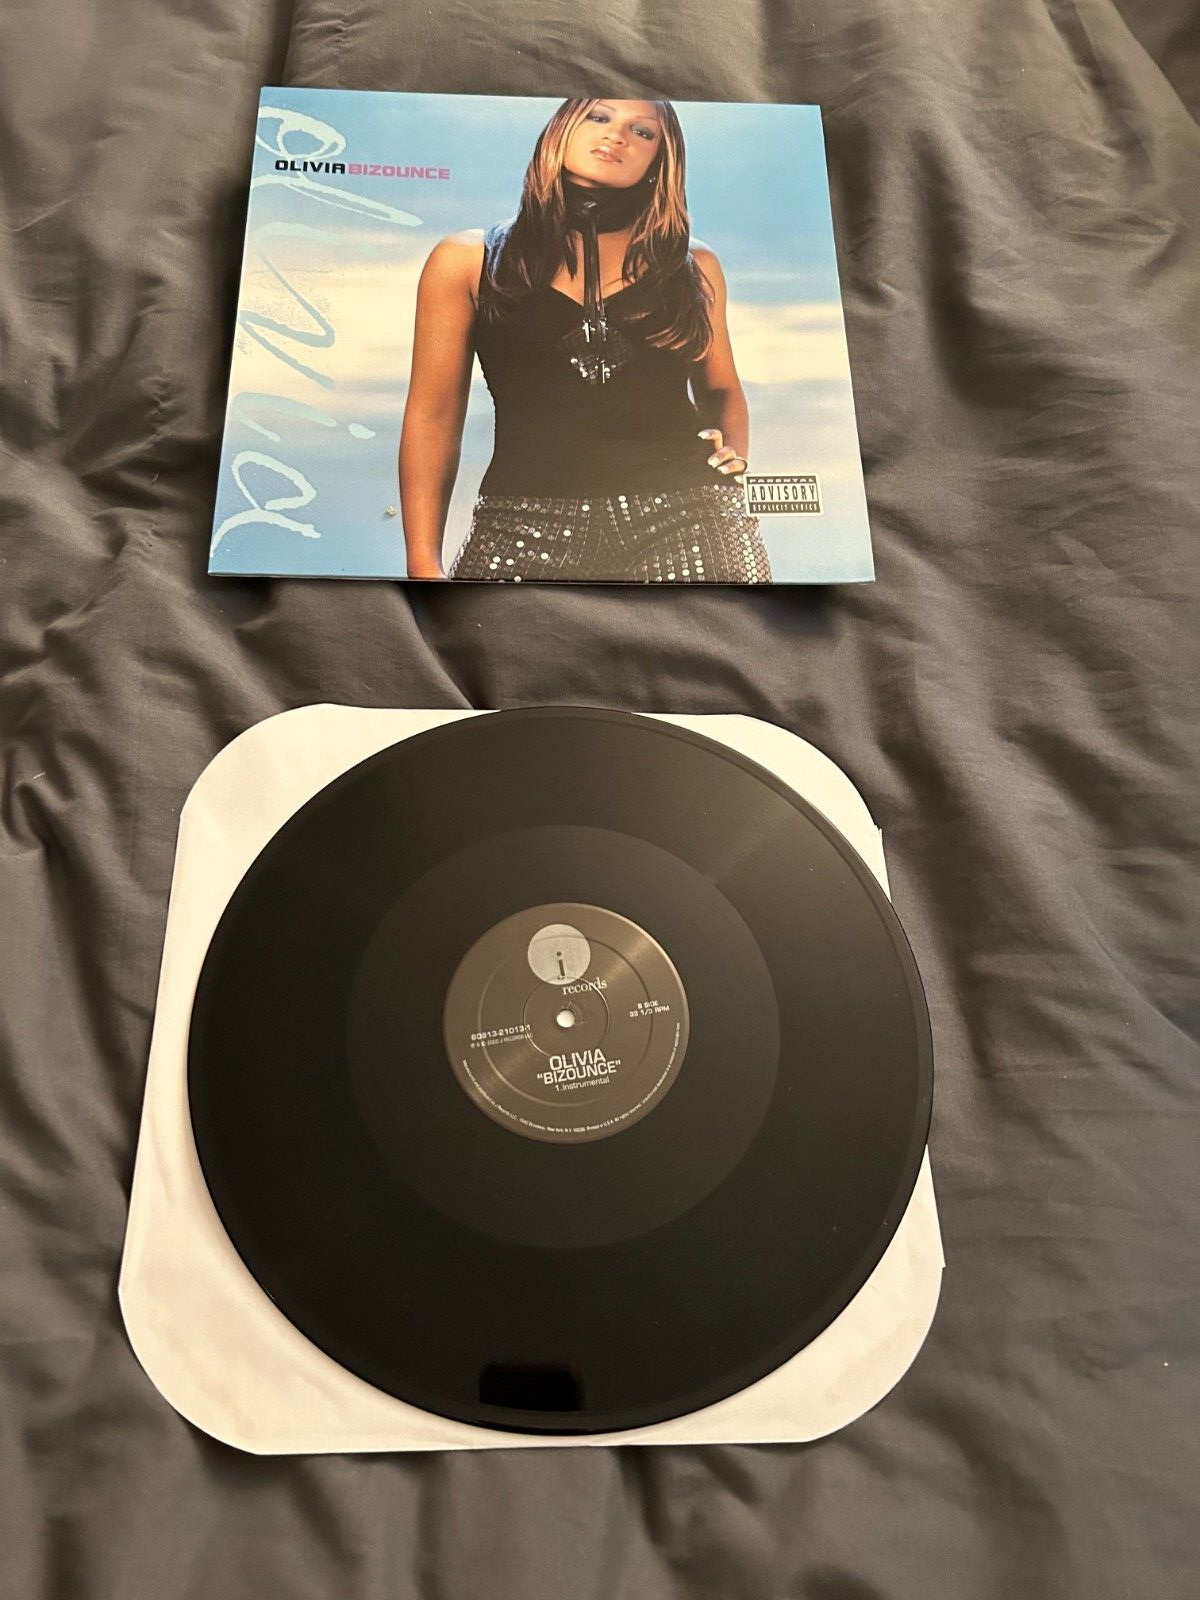 Olivia - Bizounce - 12 Inch Single vinyl LP record  excellent